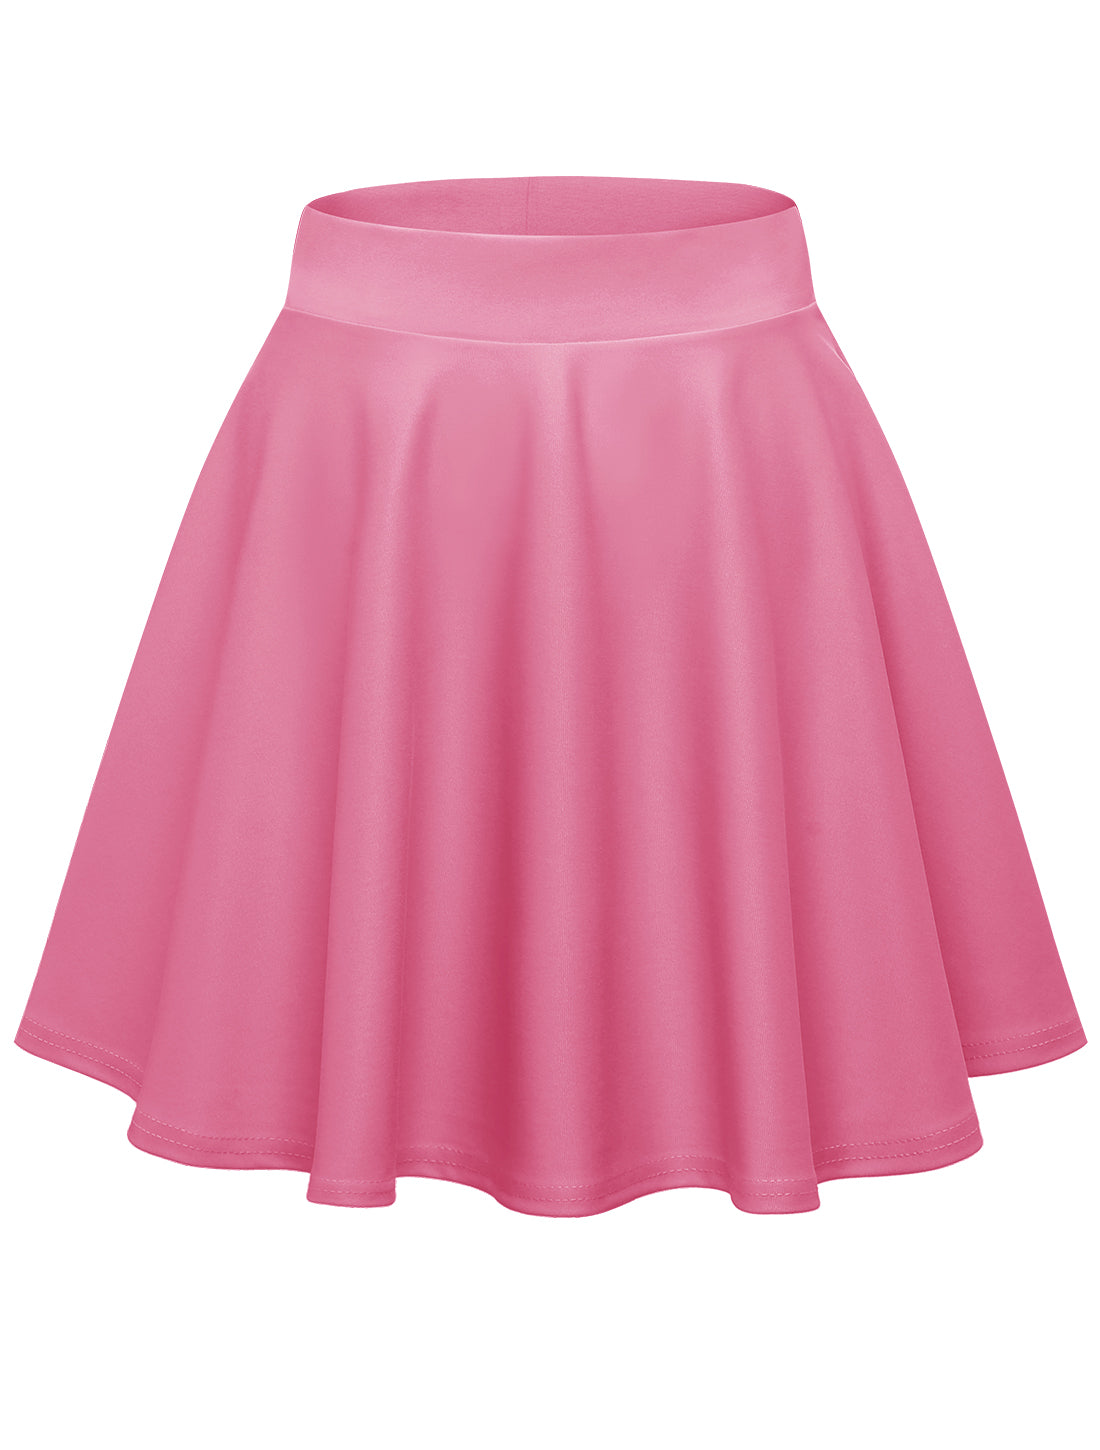 amazon.com Amazon.com: SheIn Women's Basic Solid Cutout Scallop Hem Flared  Mini Skater Skirt Medium Black: Clothing | ShopLook